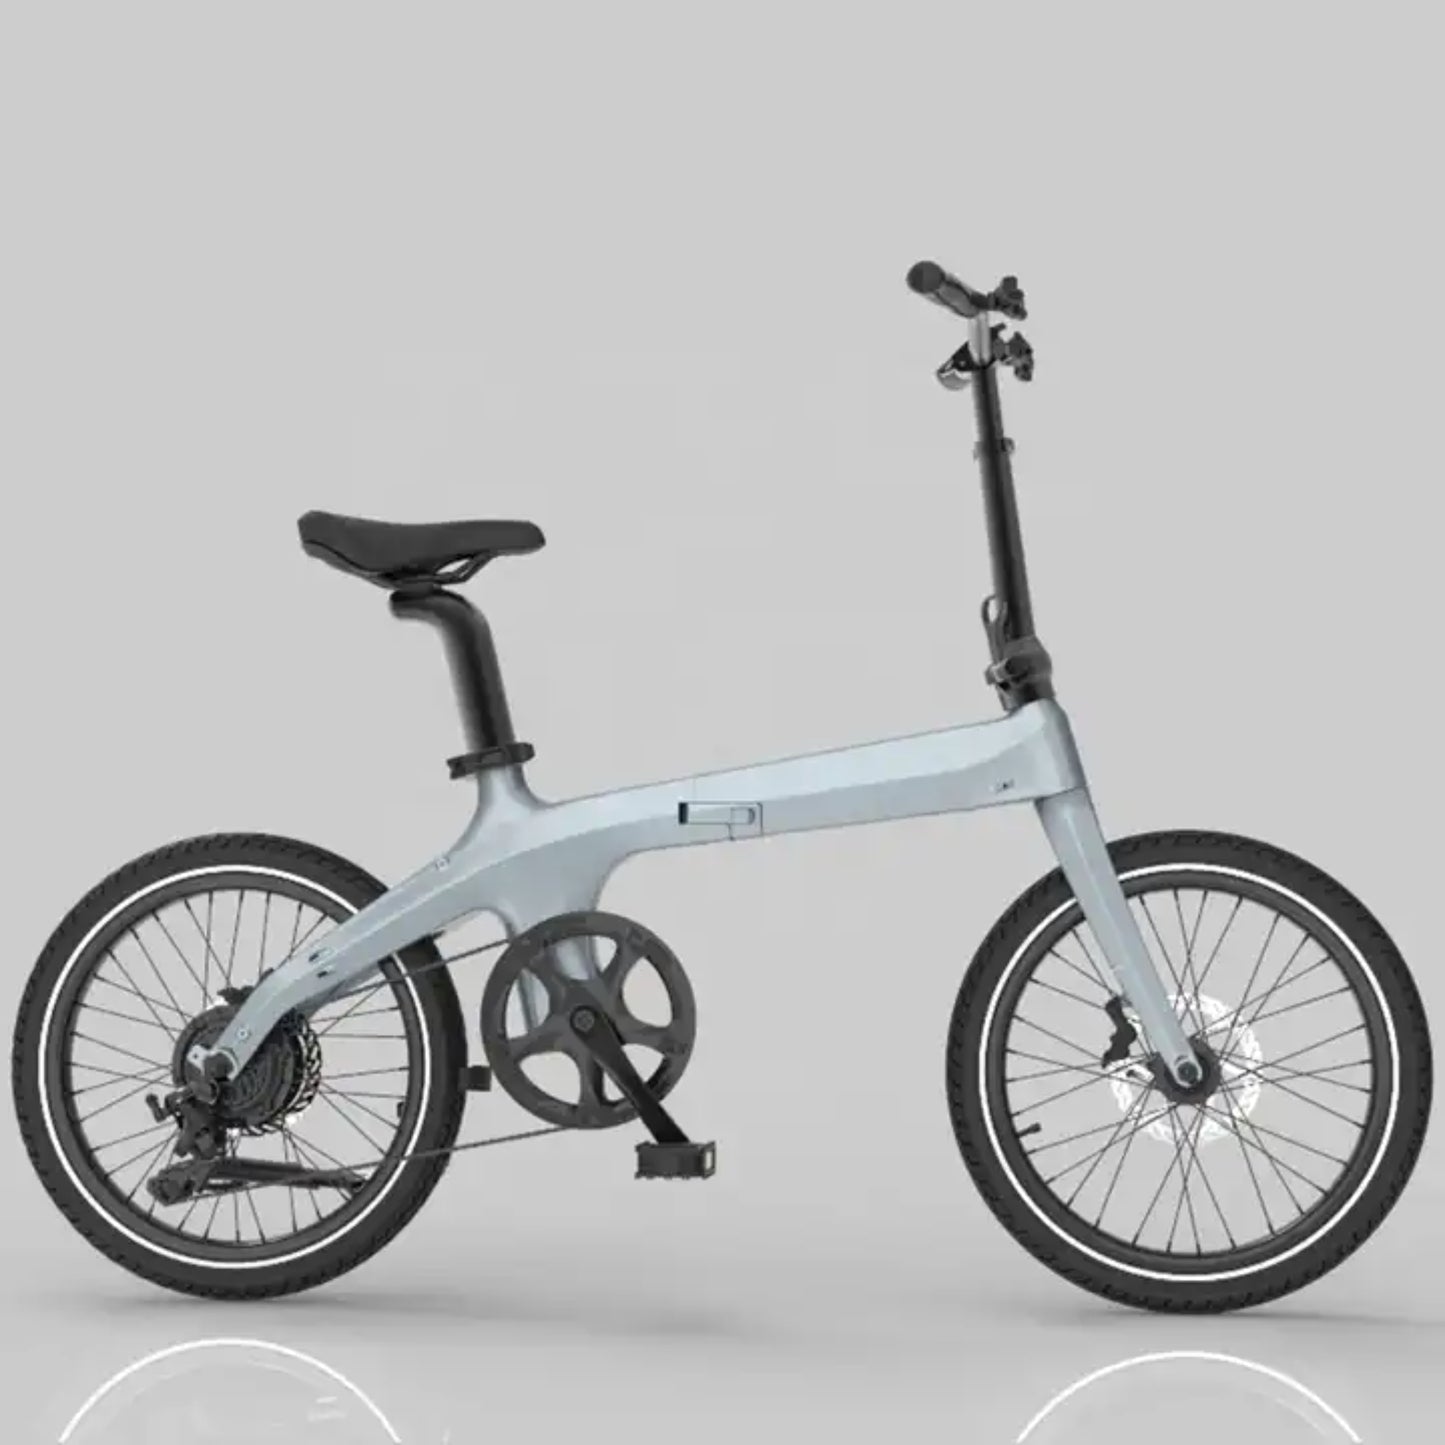 Morfuns Eole S, 20" Lightweight Carbon Fibre Folding Electric Road Bike